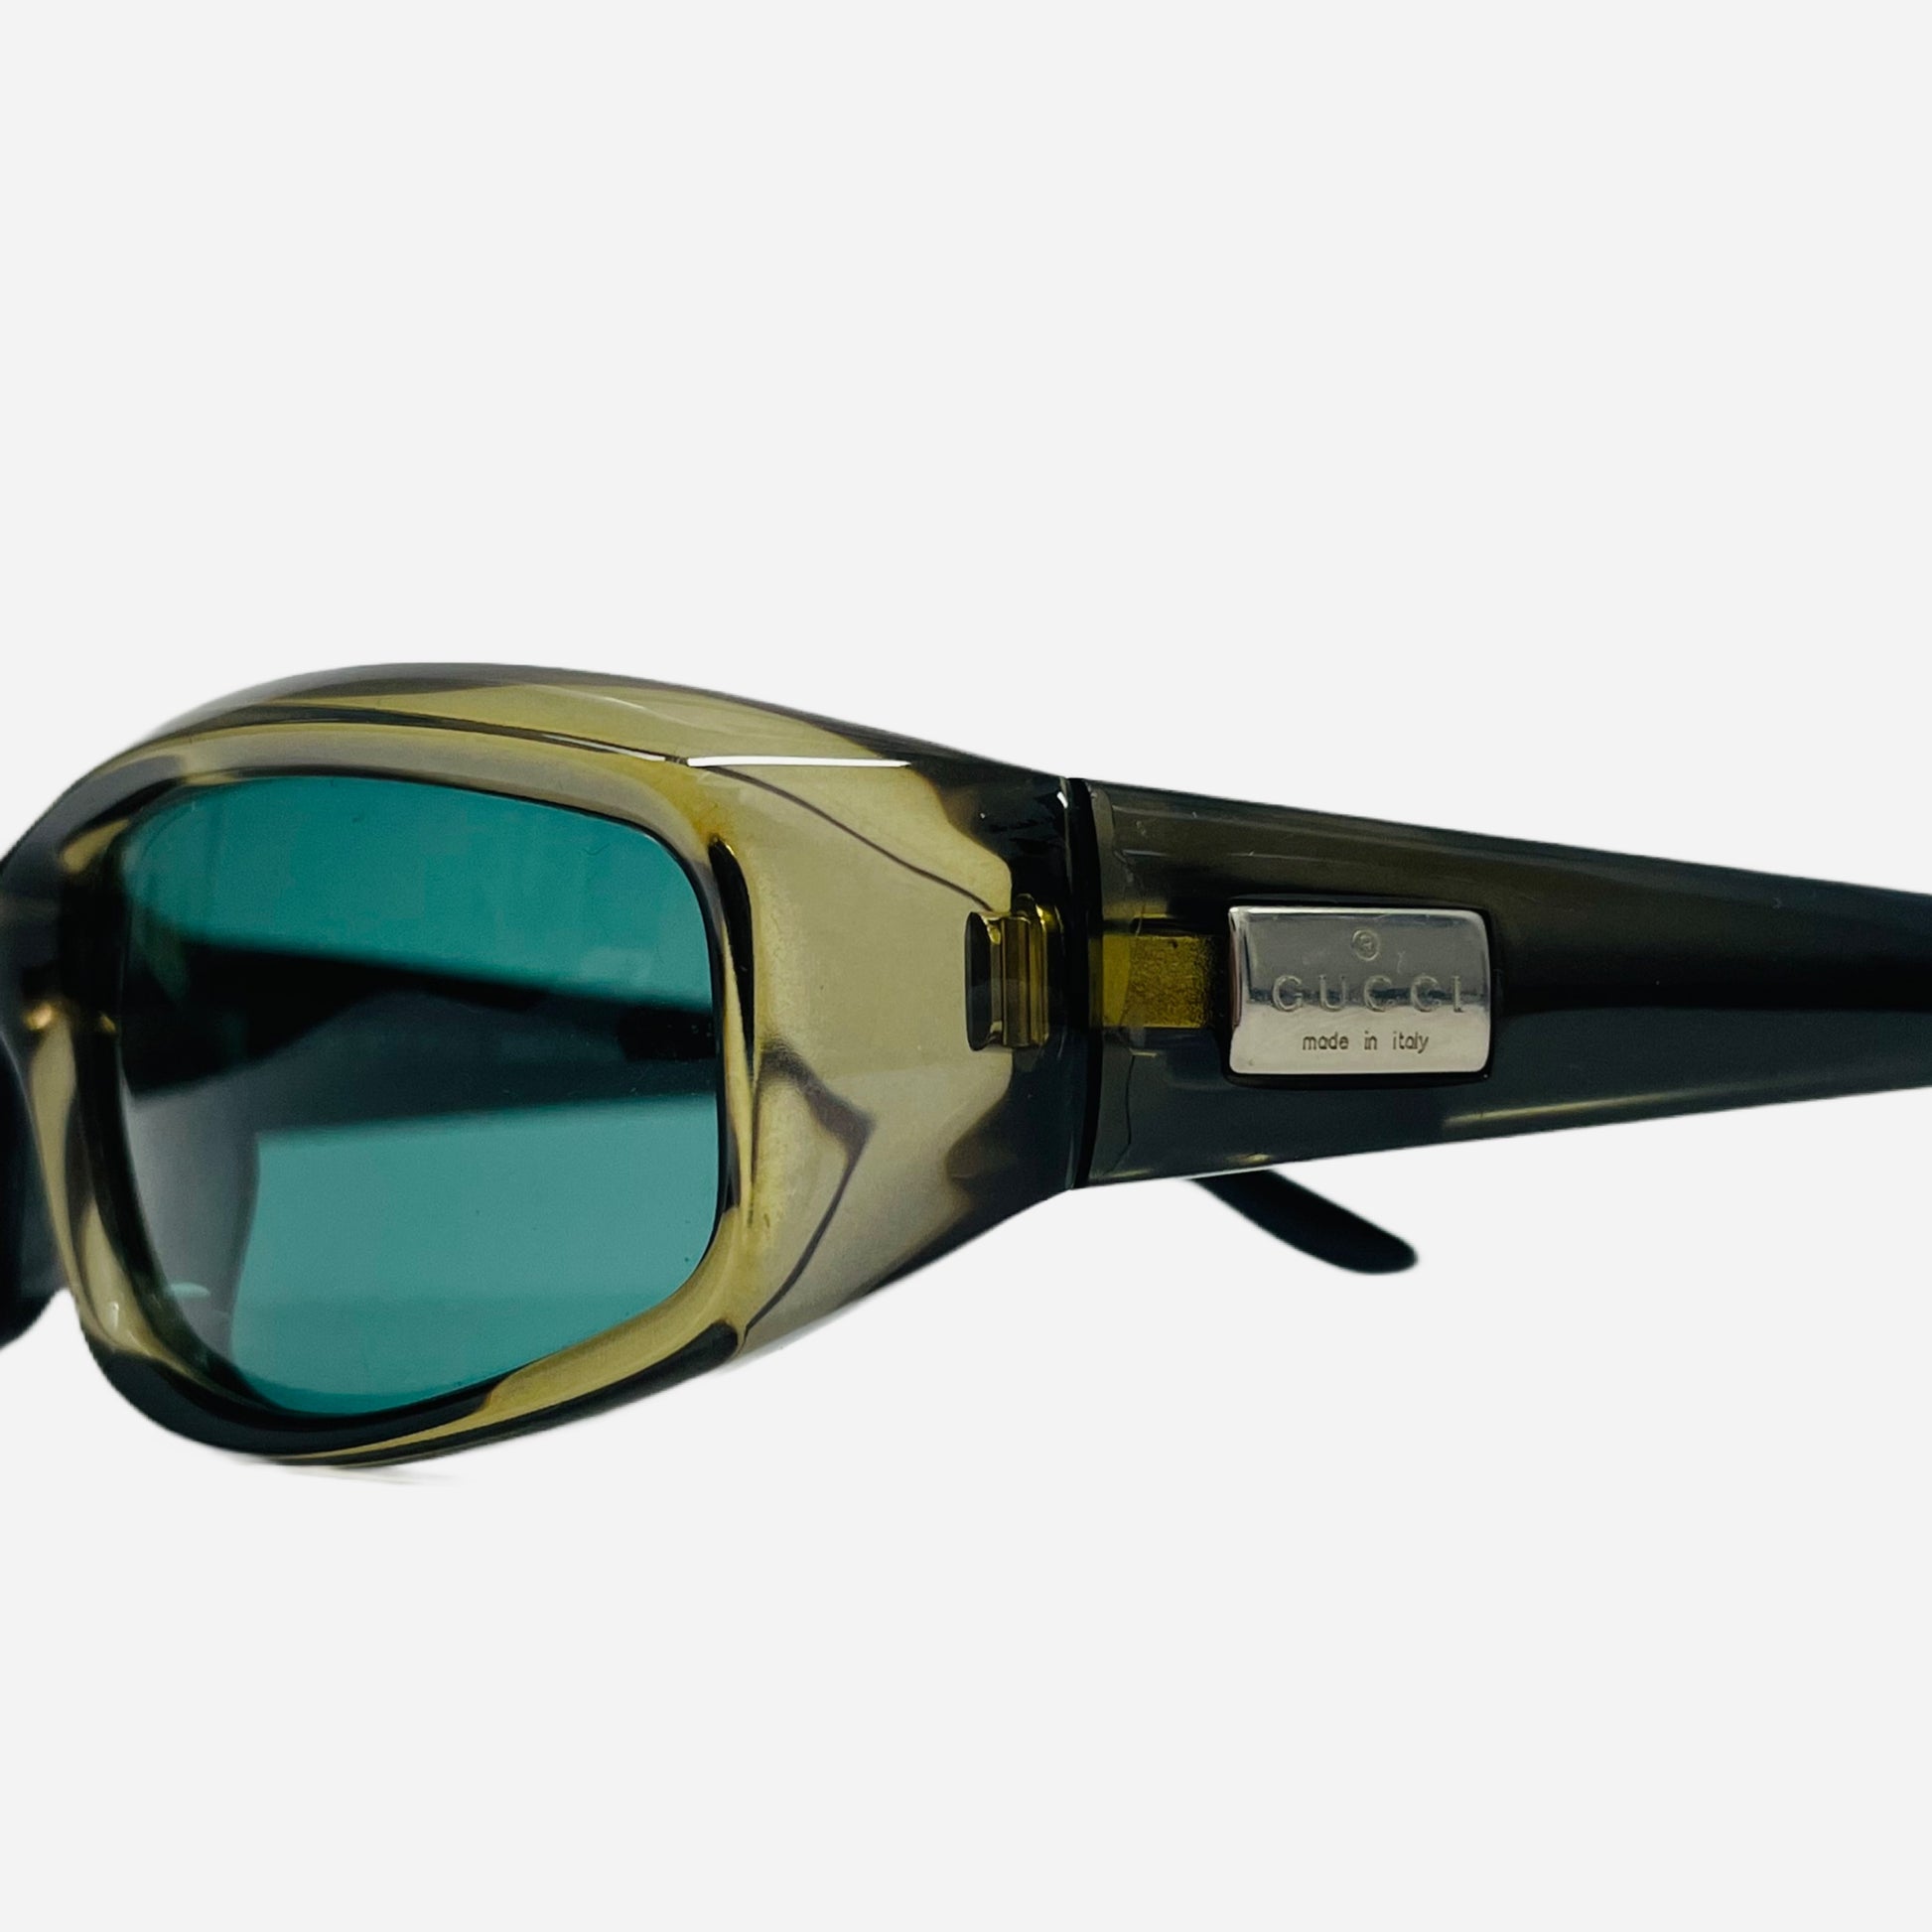 Vintage-Gucci-Sunglasses-Sonnenbrille-Schnelle-Brille-90s-2454-_S-The-Seekers-detail